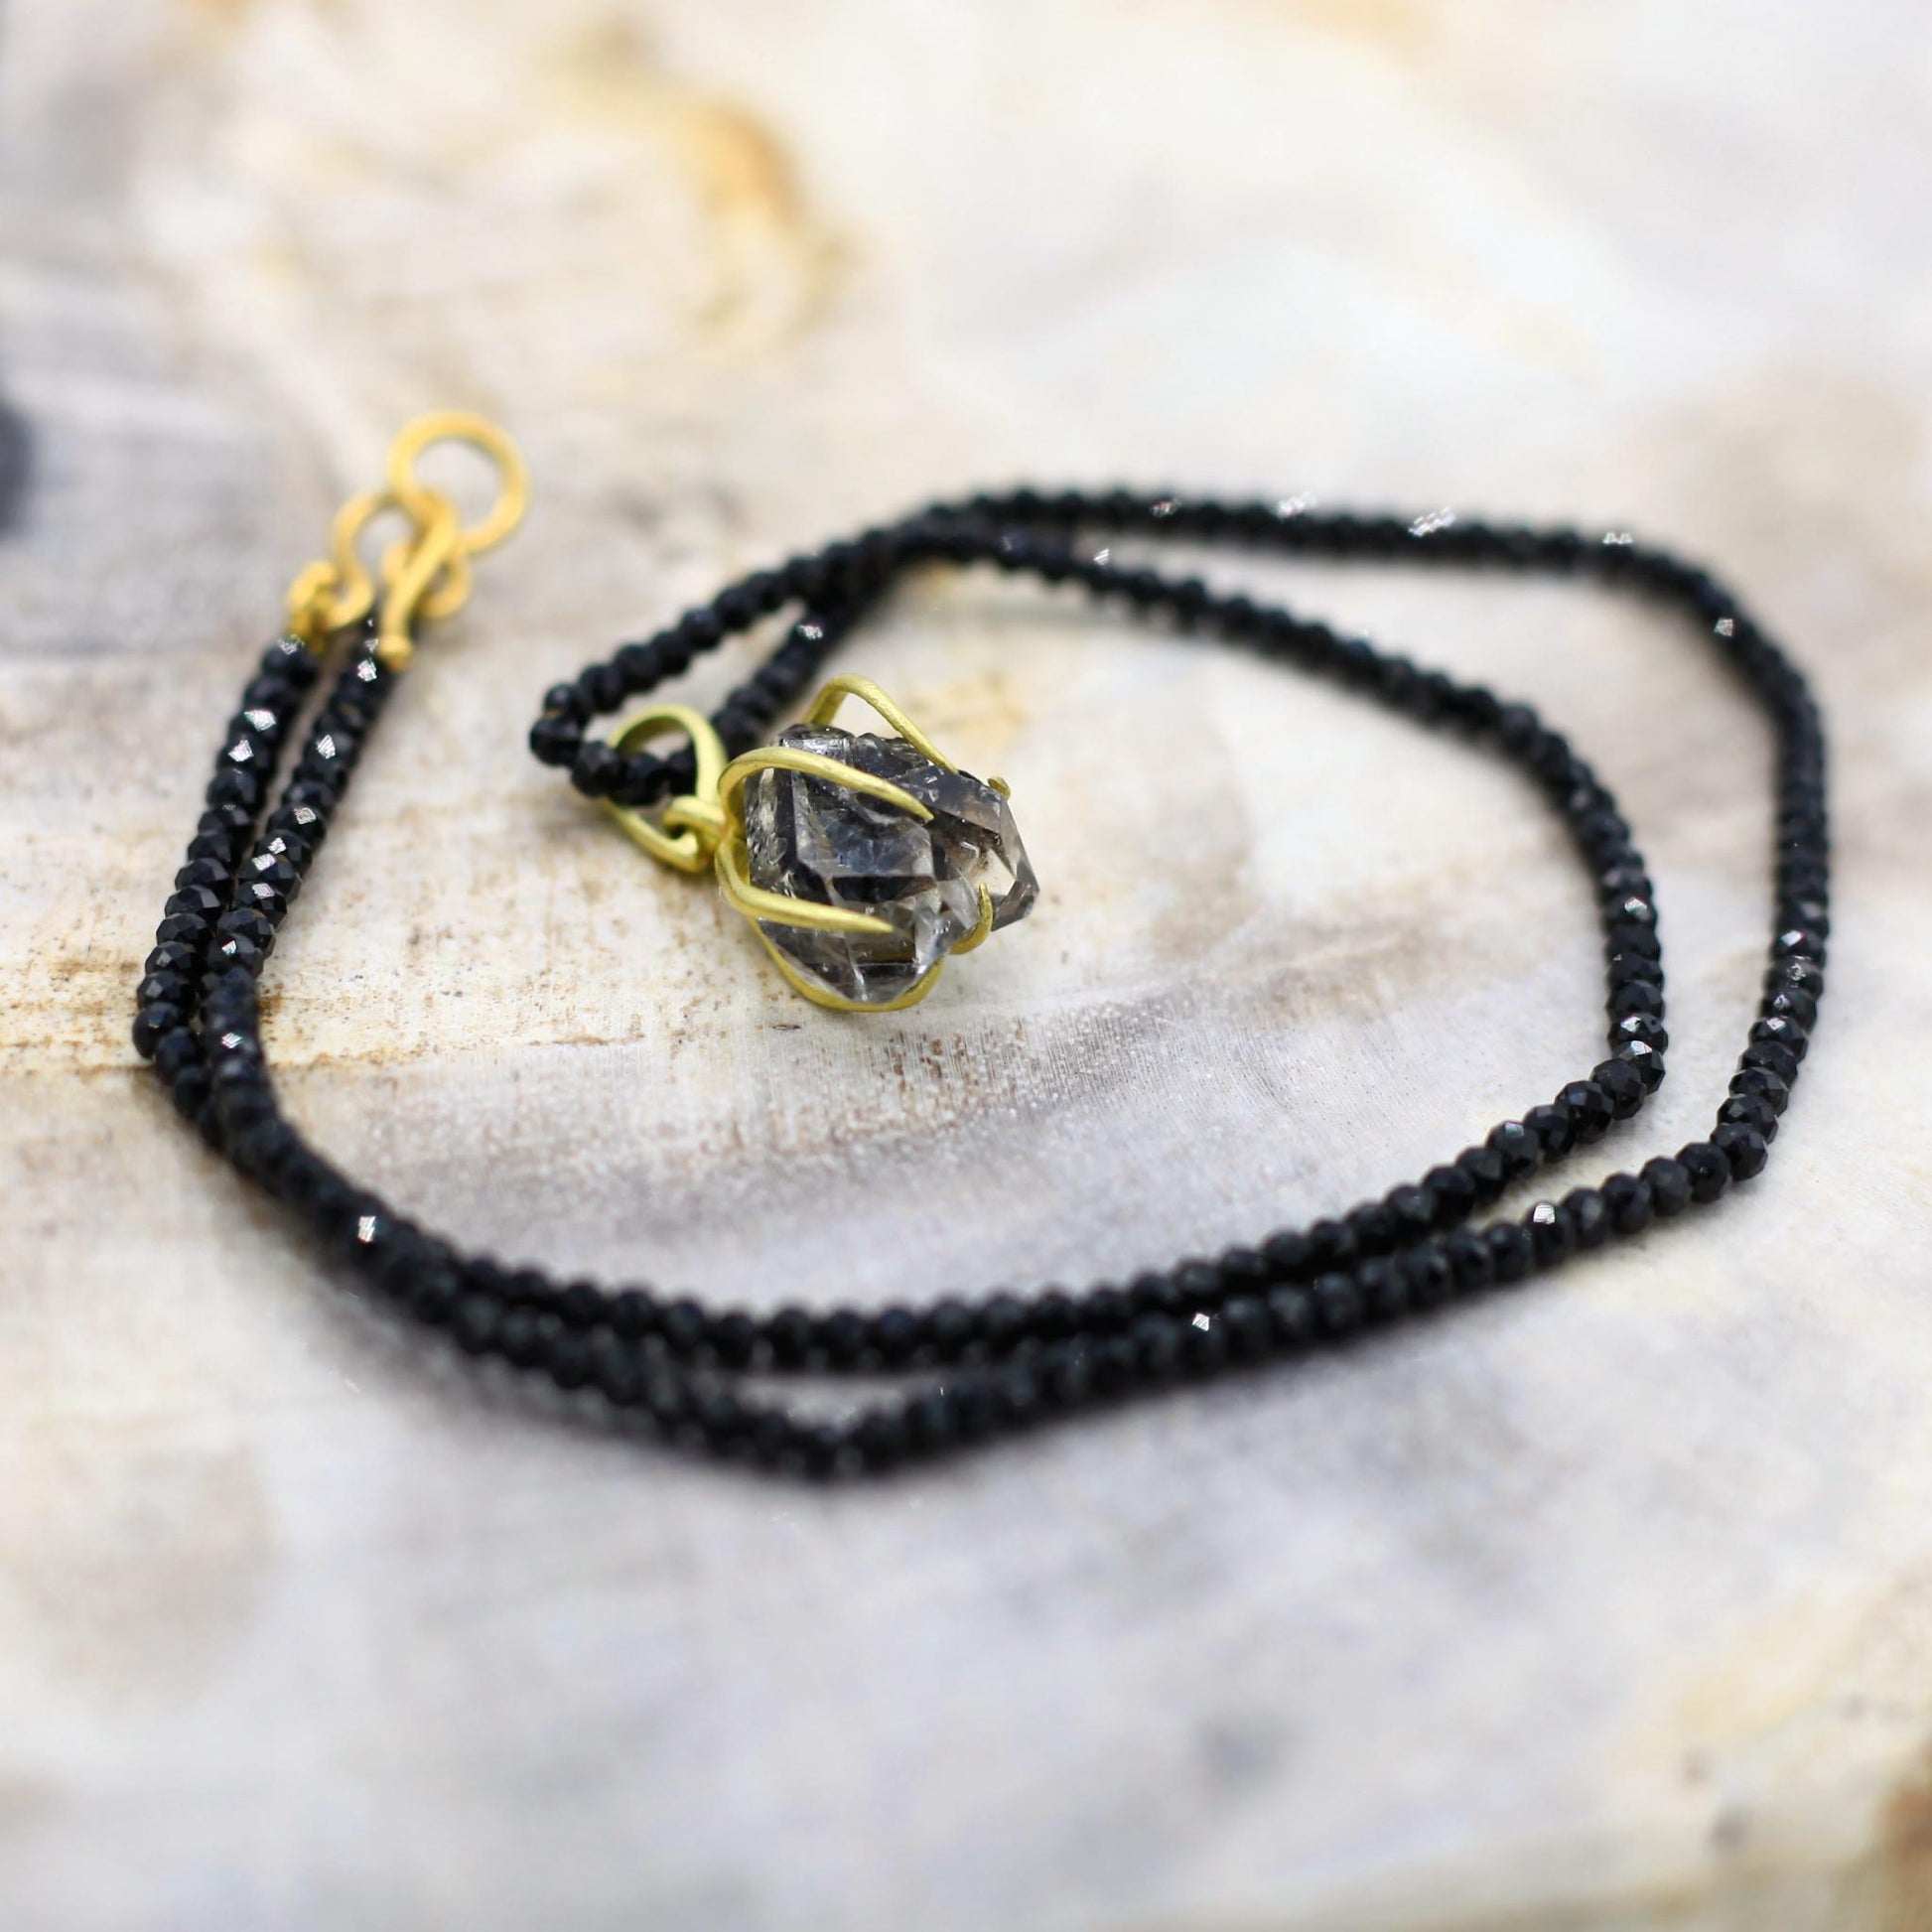 Lena Skadegard Jewels | Herkimer Diamond + Black Spinel 9k Gold Clasp Necklace | Firecracker